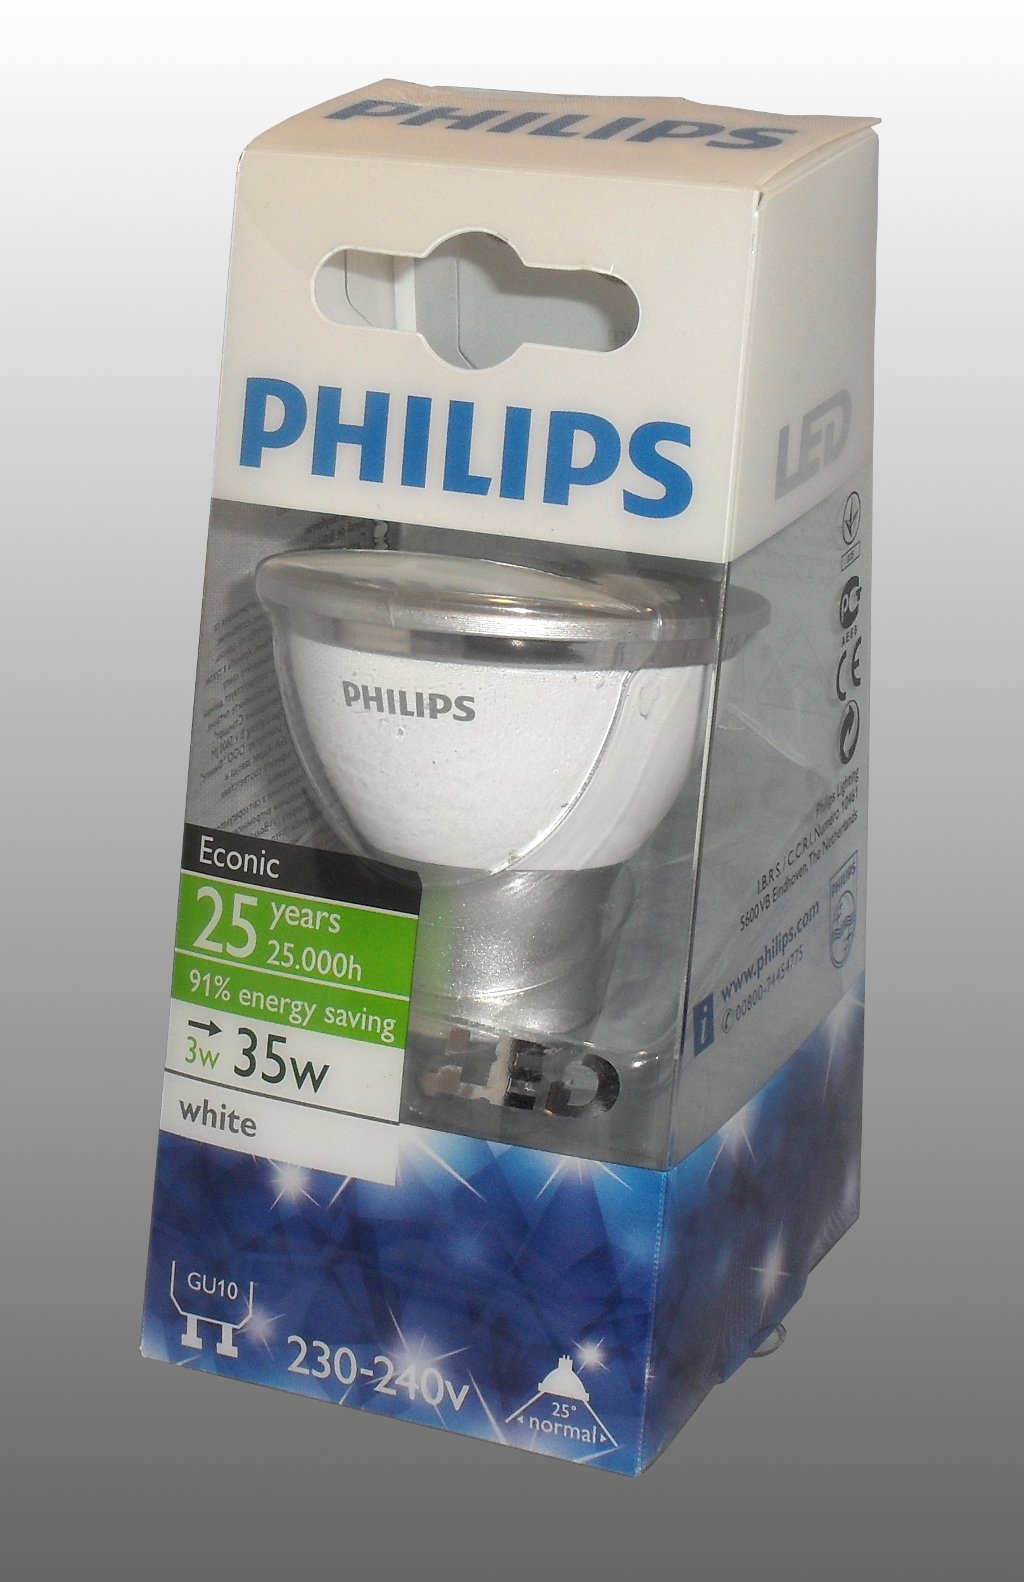 Philips Econic 3W GU10 25 Degree 3000K LED Lamp Packaging